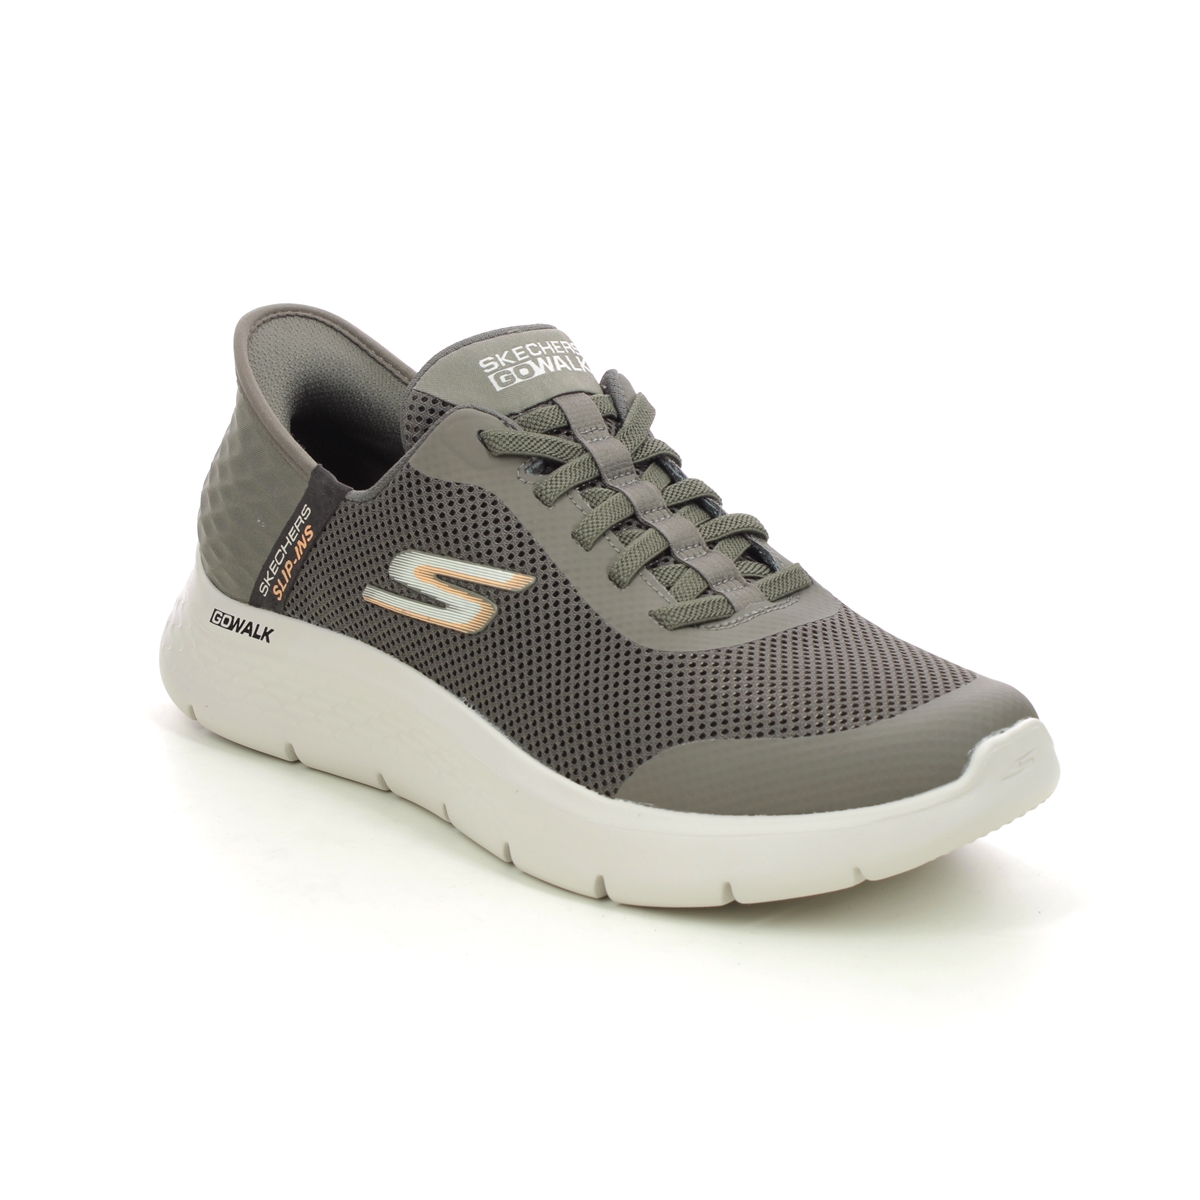 Skechers Go Walk Shoes - Begg Shoes